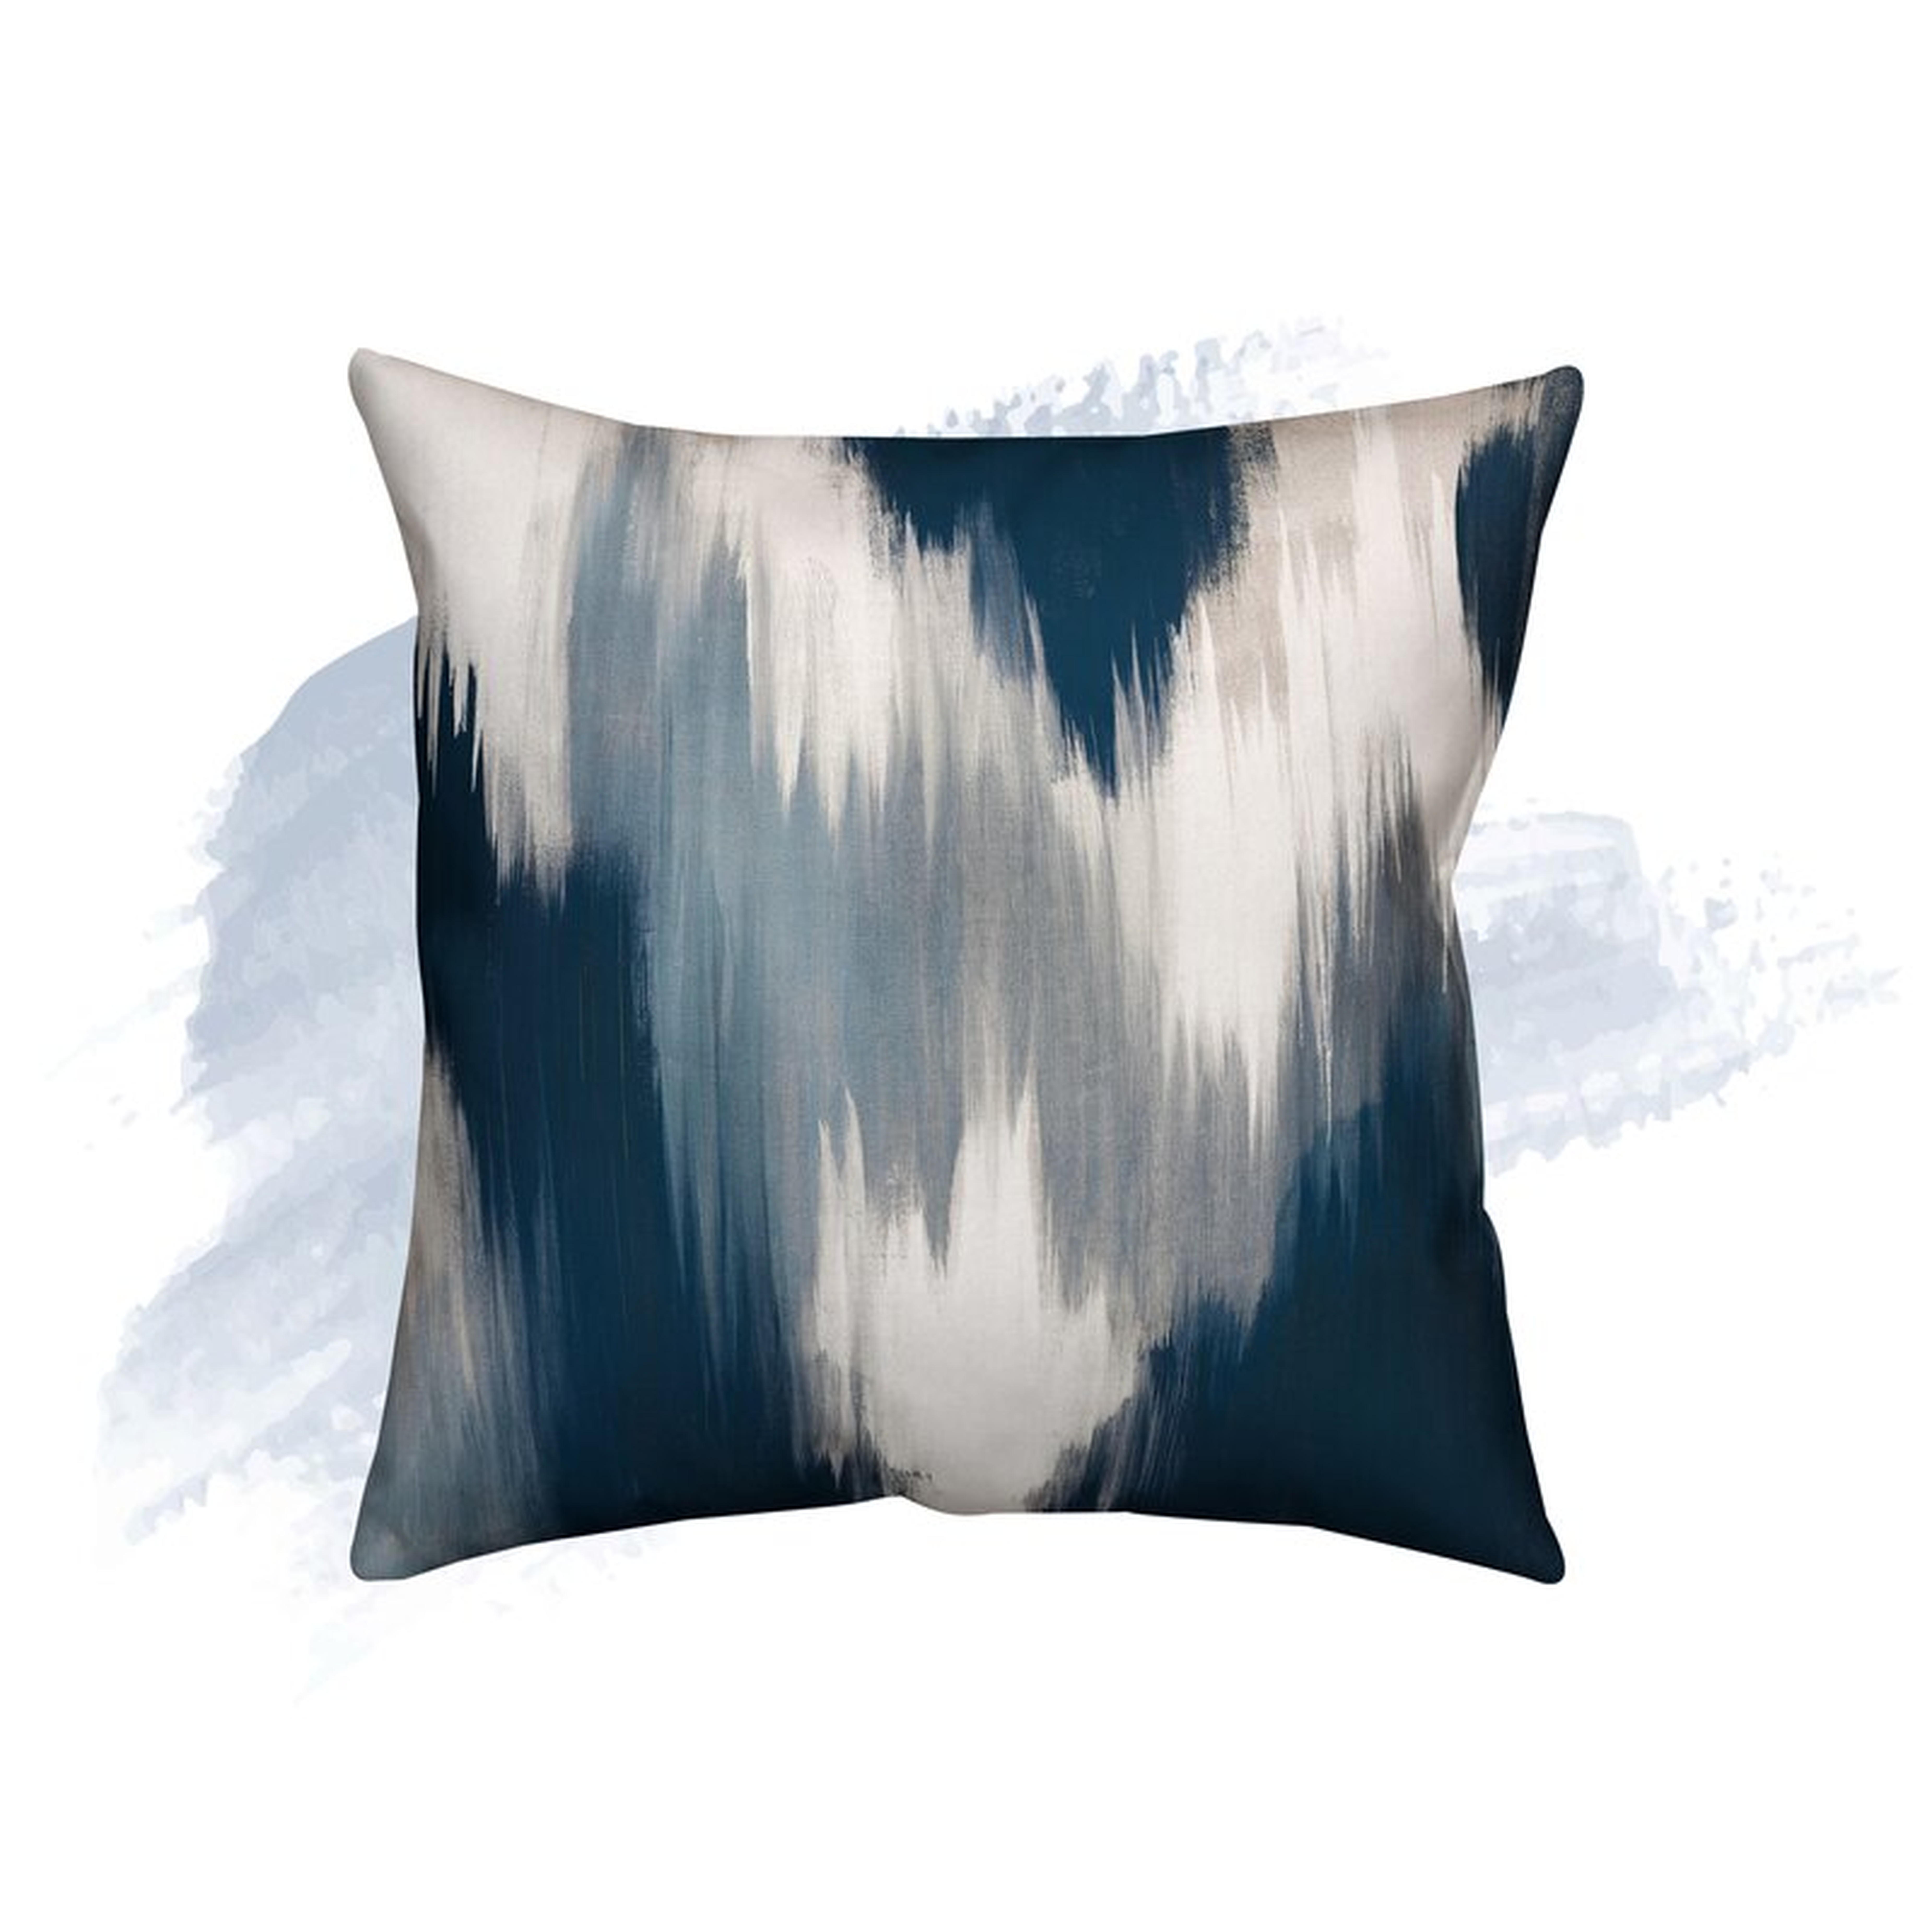 Orlando Square Pillow Cover & Insert, Blue, 18" x 18" - Wayfair